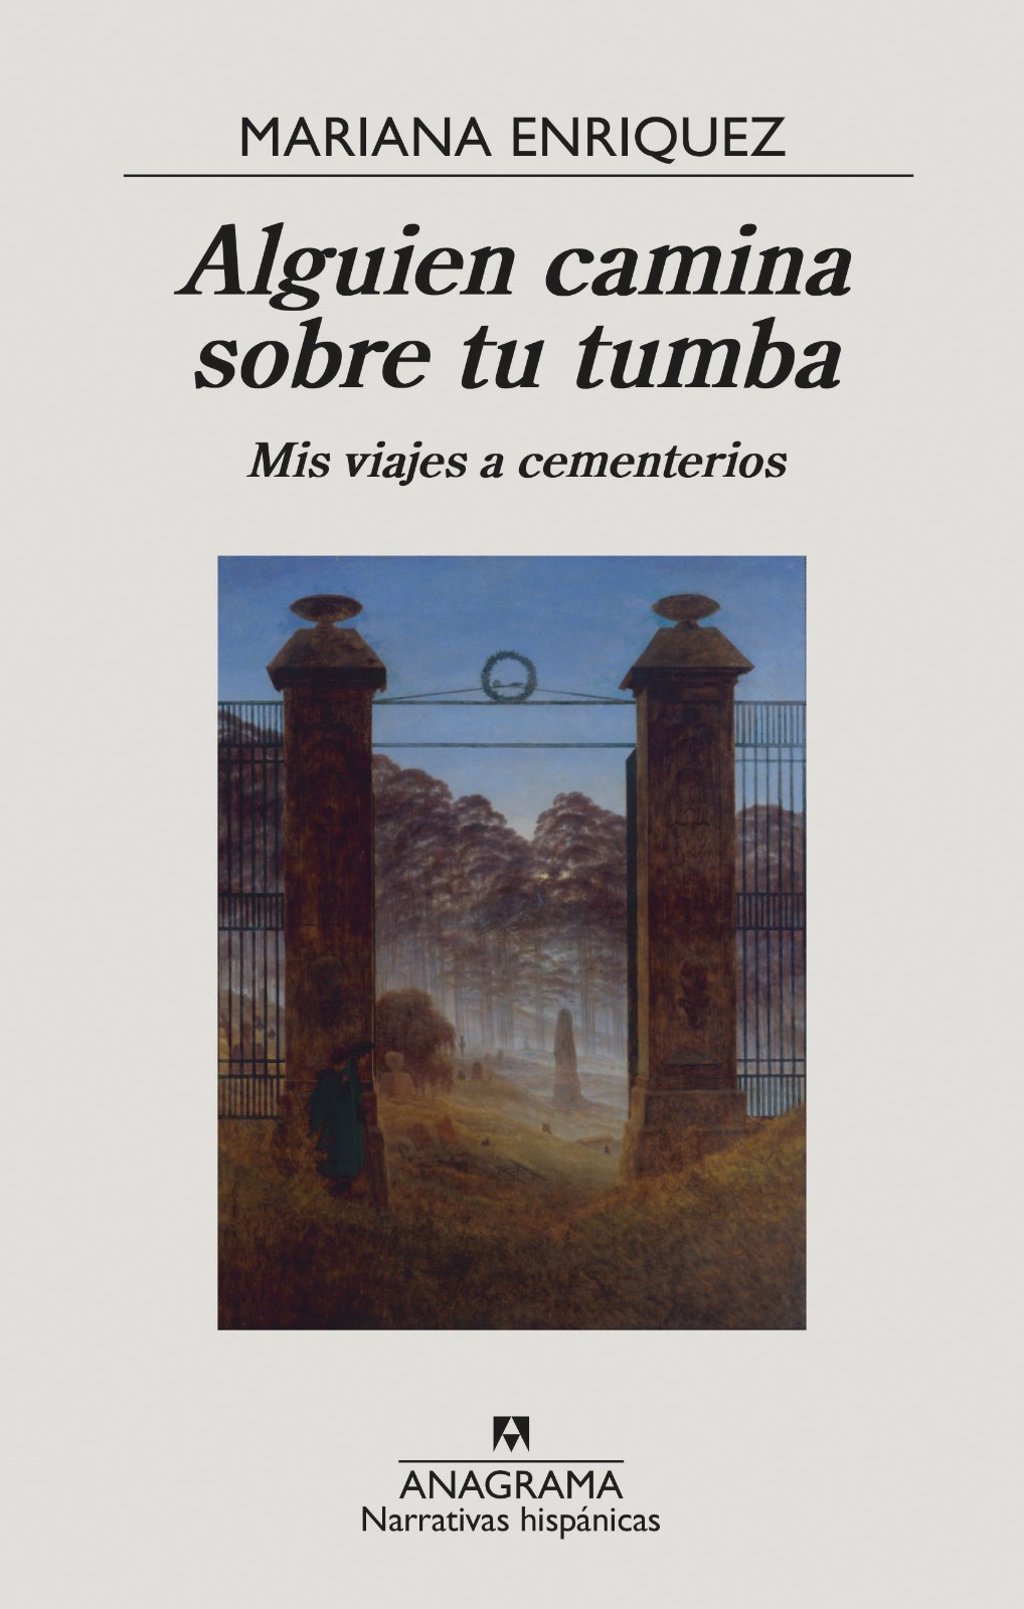 Alguien camina sobre tu tumba by Mariana Enríquez